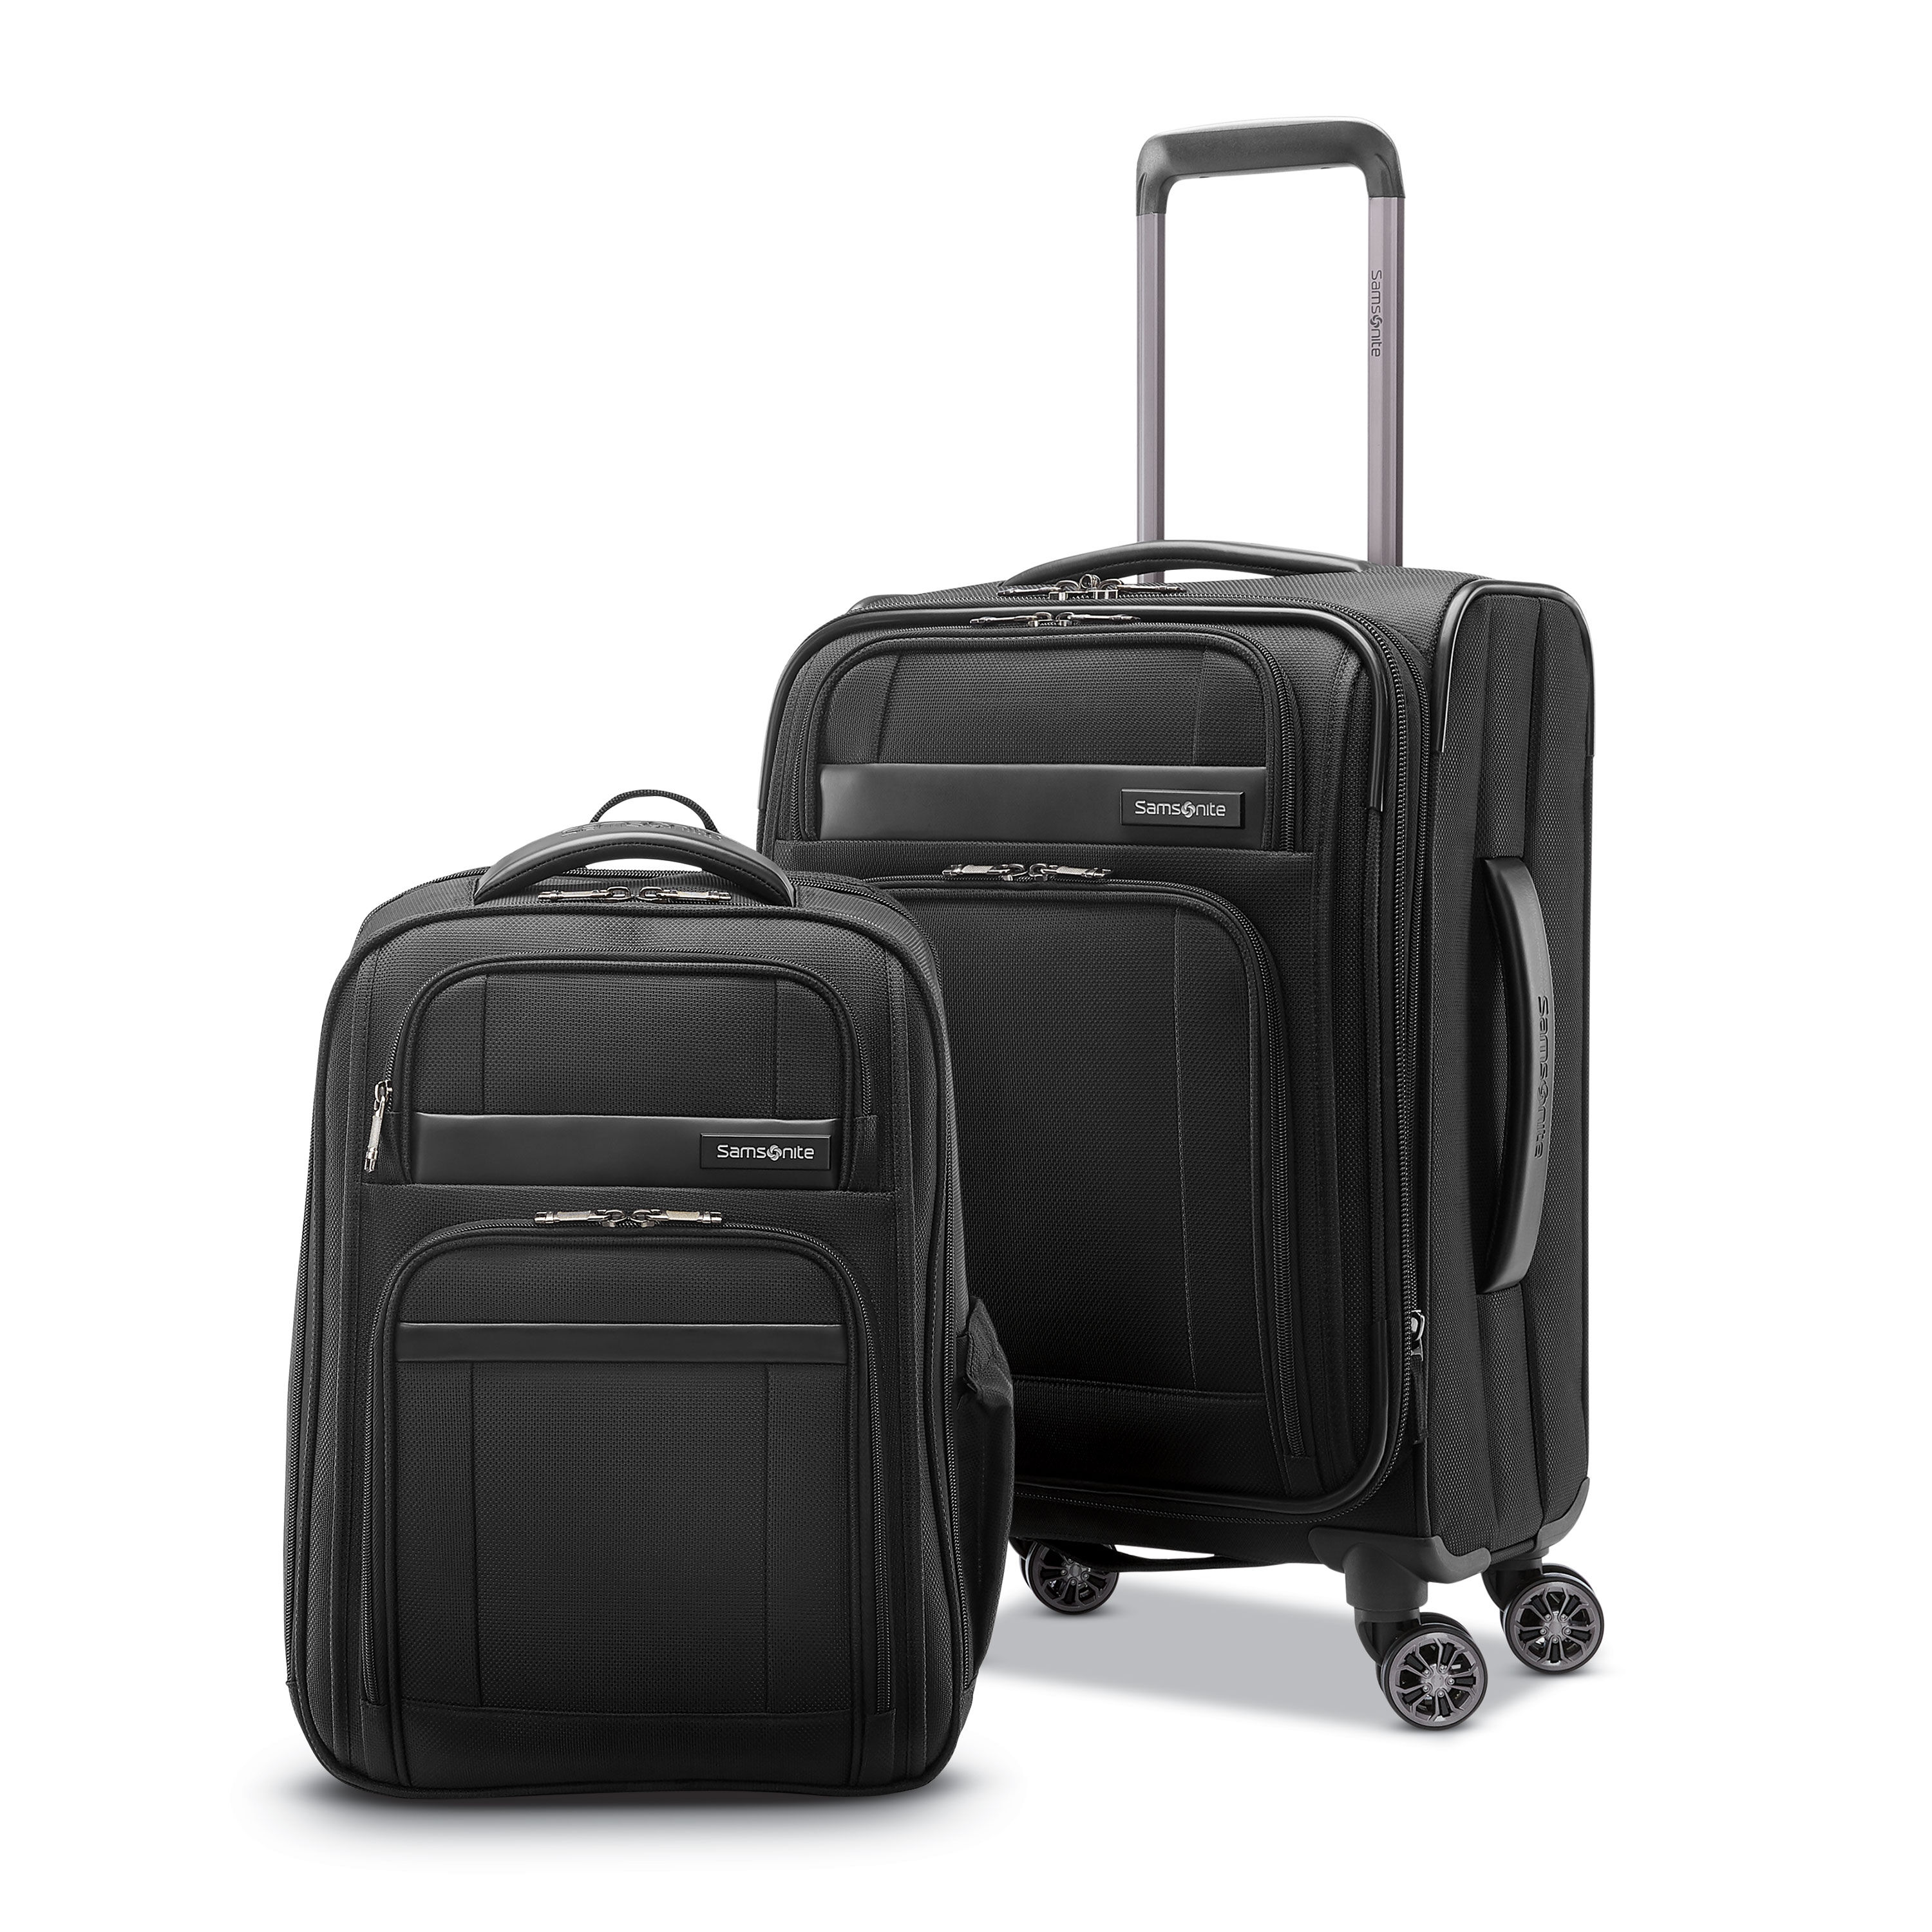 Luggage Sets | Costco